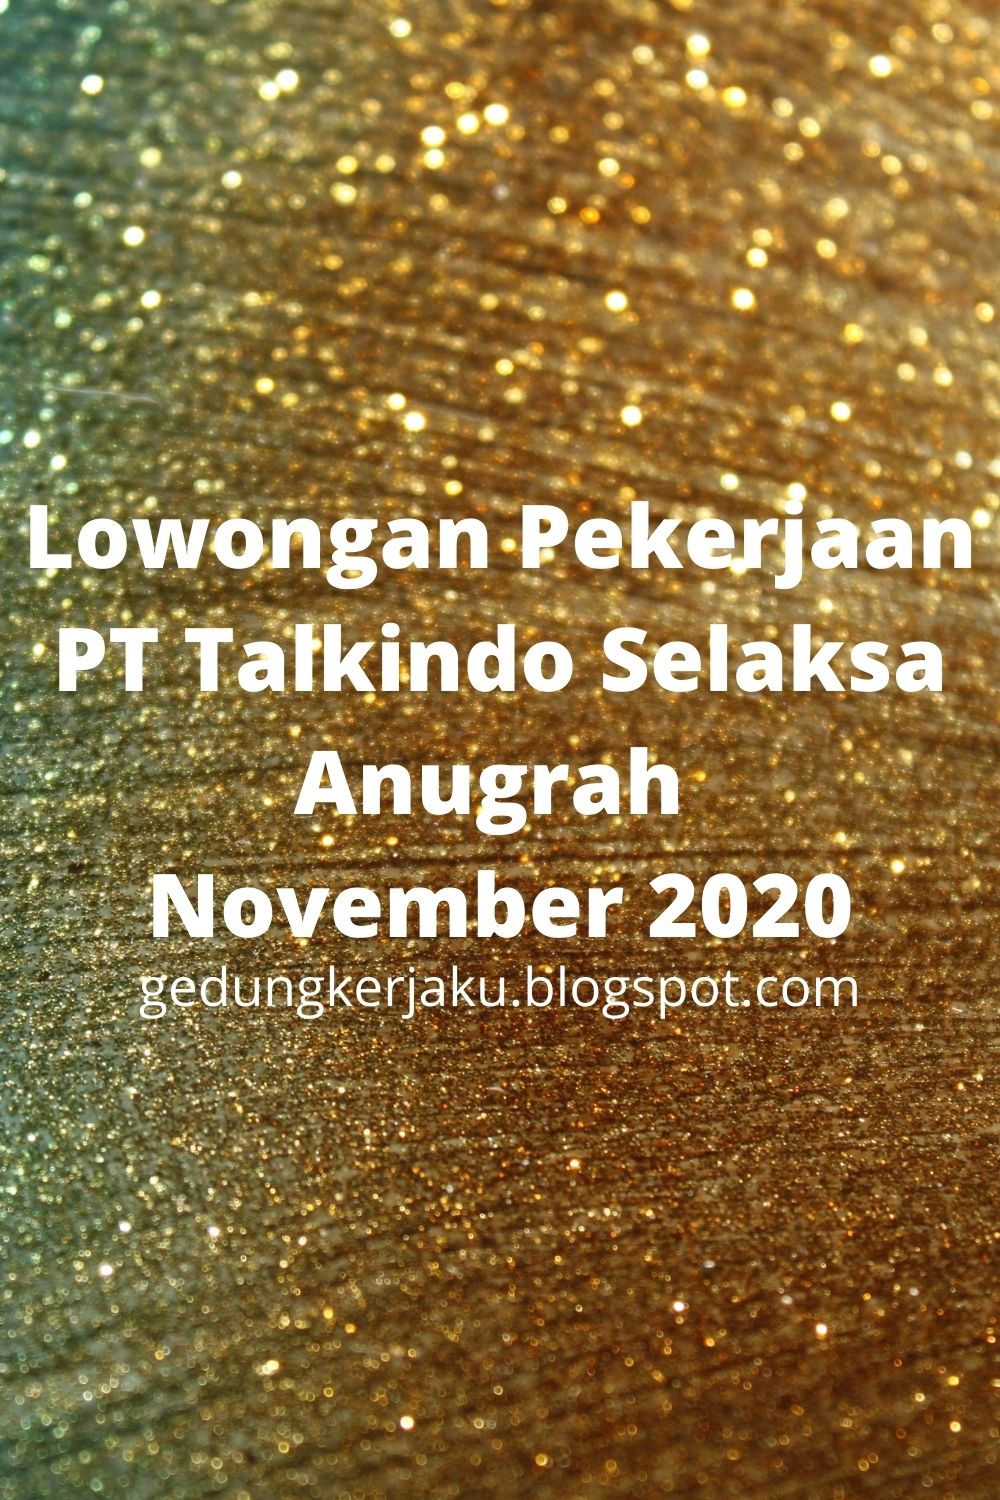 Lowongan Pekerjaan PT Talkindo Selaksa Anugrah November 2020